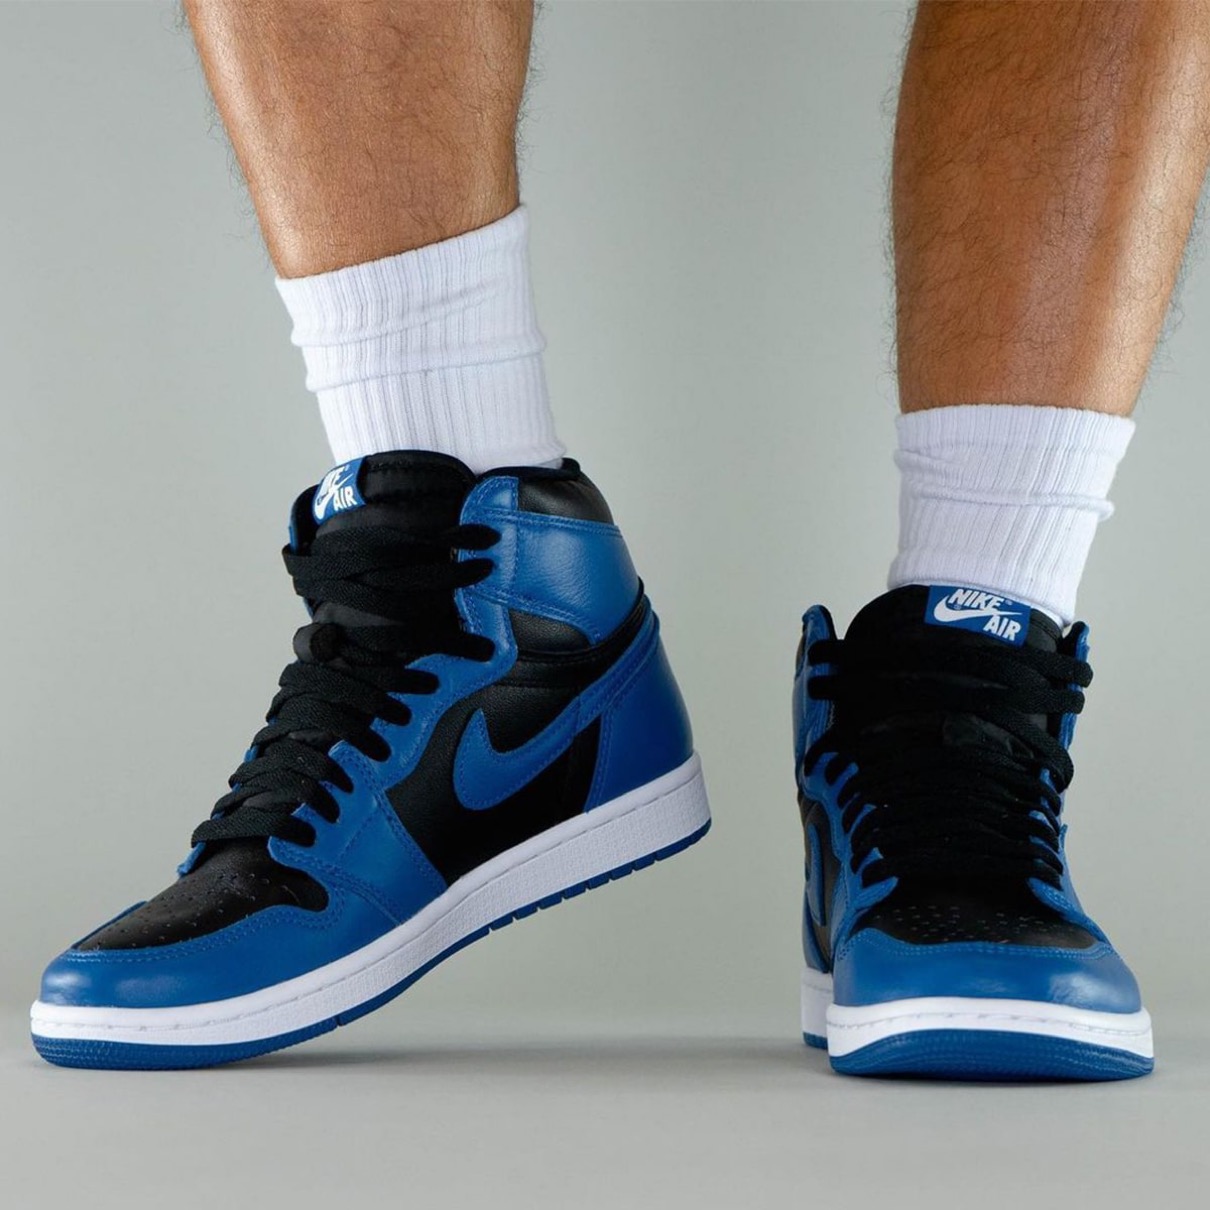 health Therefore regain Nike】Air Jordan 1 Retro High OG “Dark Marina Blue”が国内2月5日に発売予定 | UP TO DATE